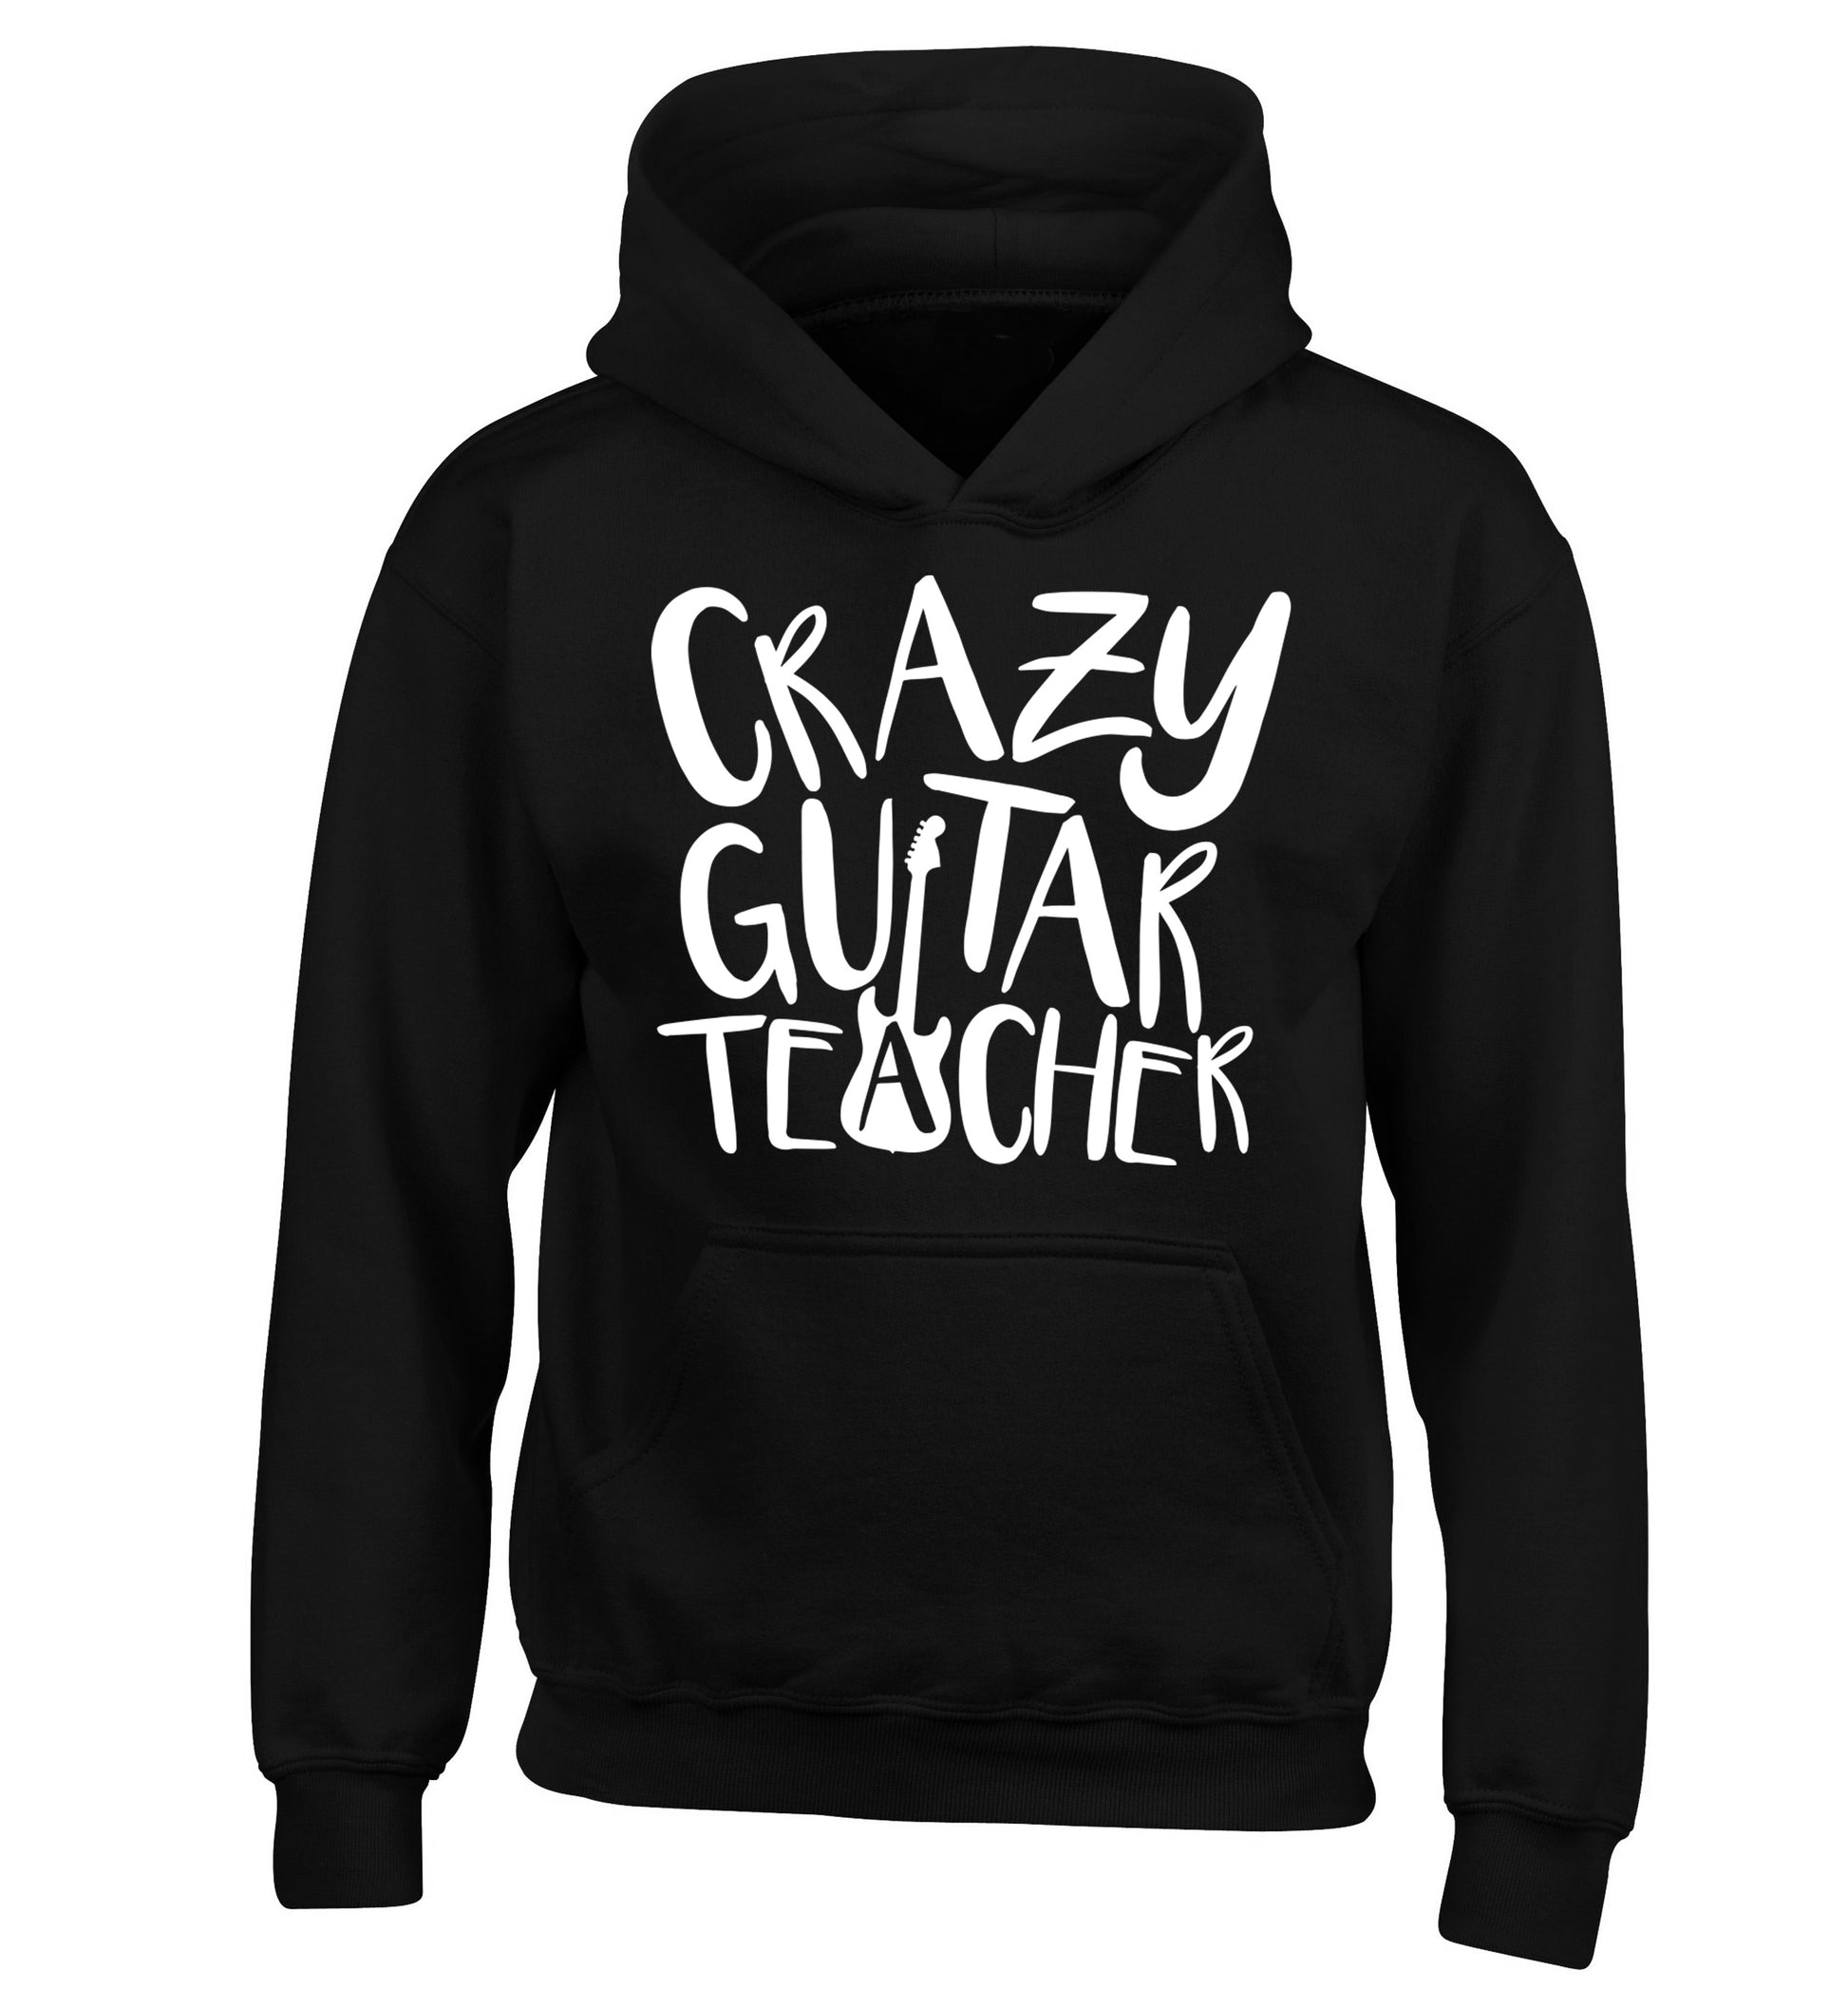 Crazy guitar teacher children's black hoodie 12-13 Years